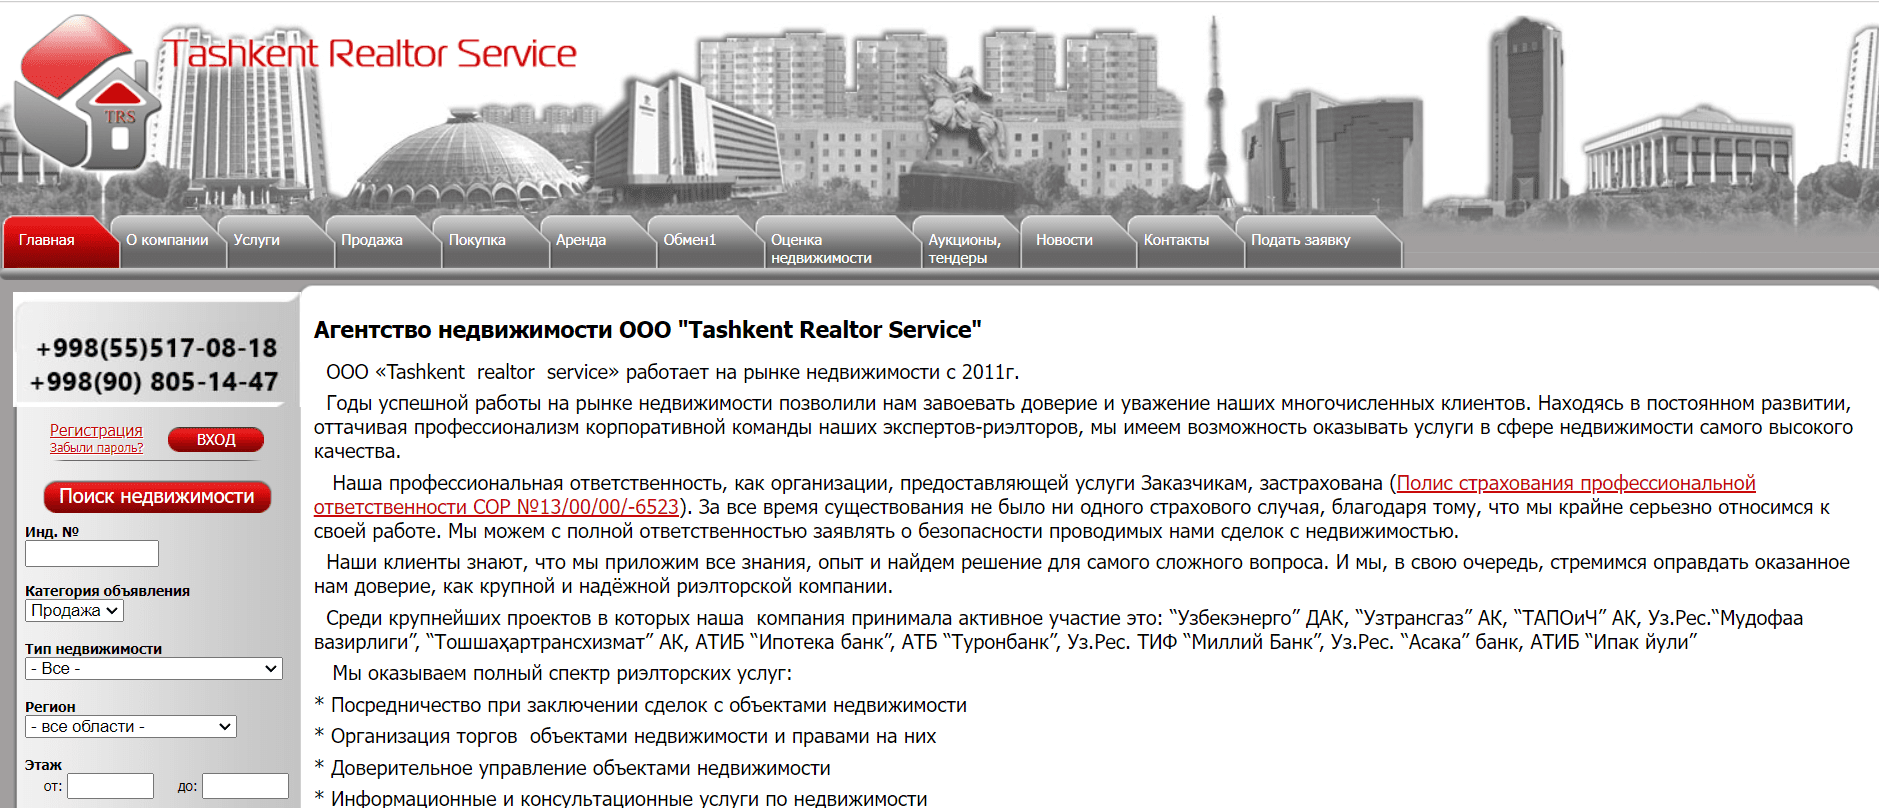 Tashkent realtor service (realtorg.uz)